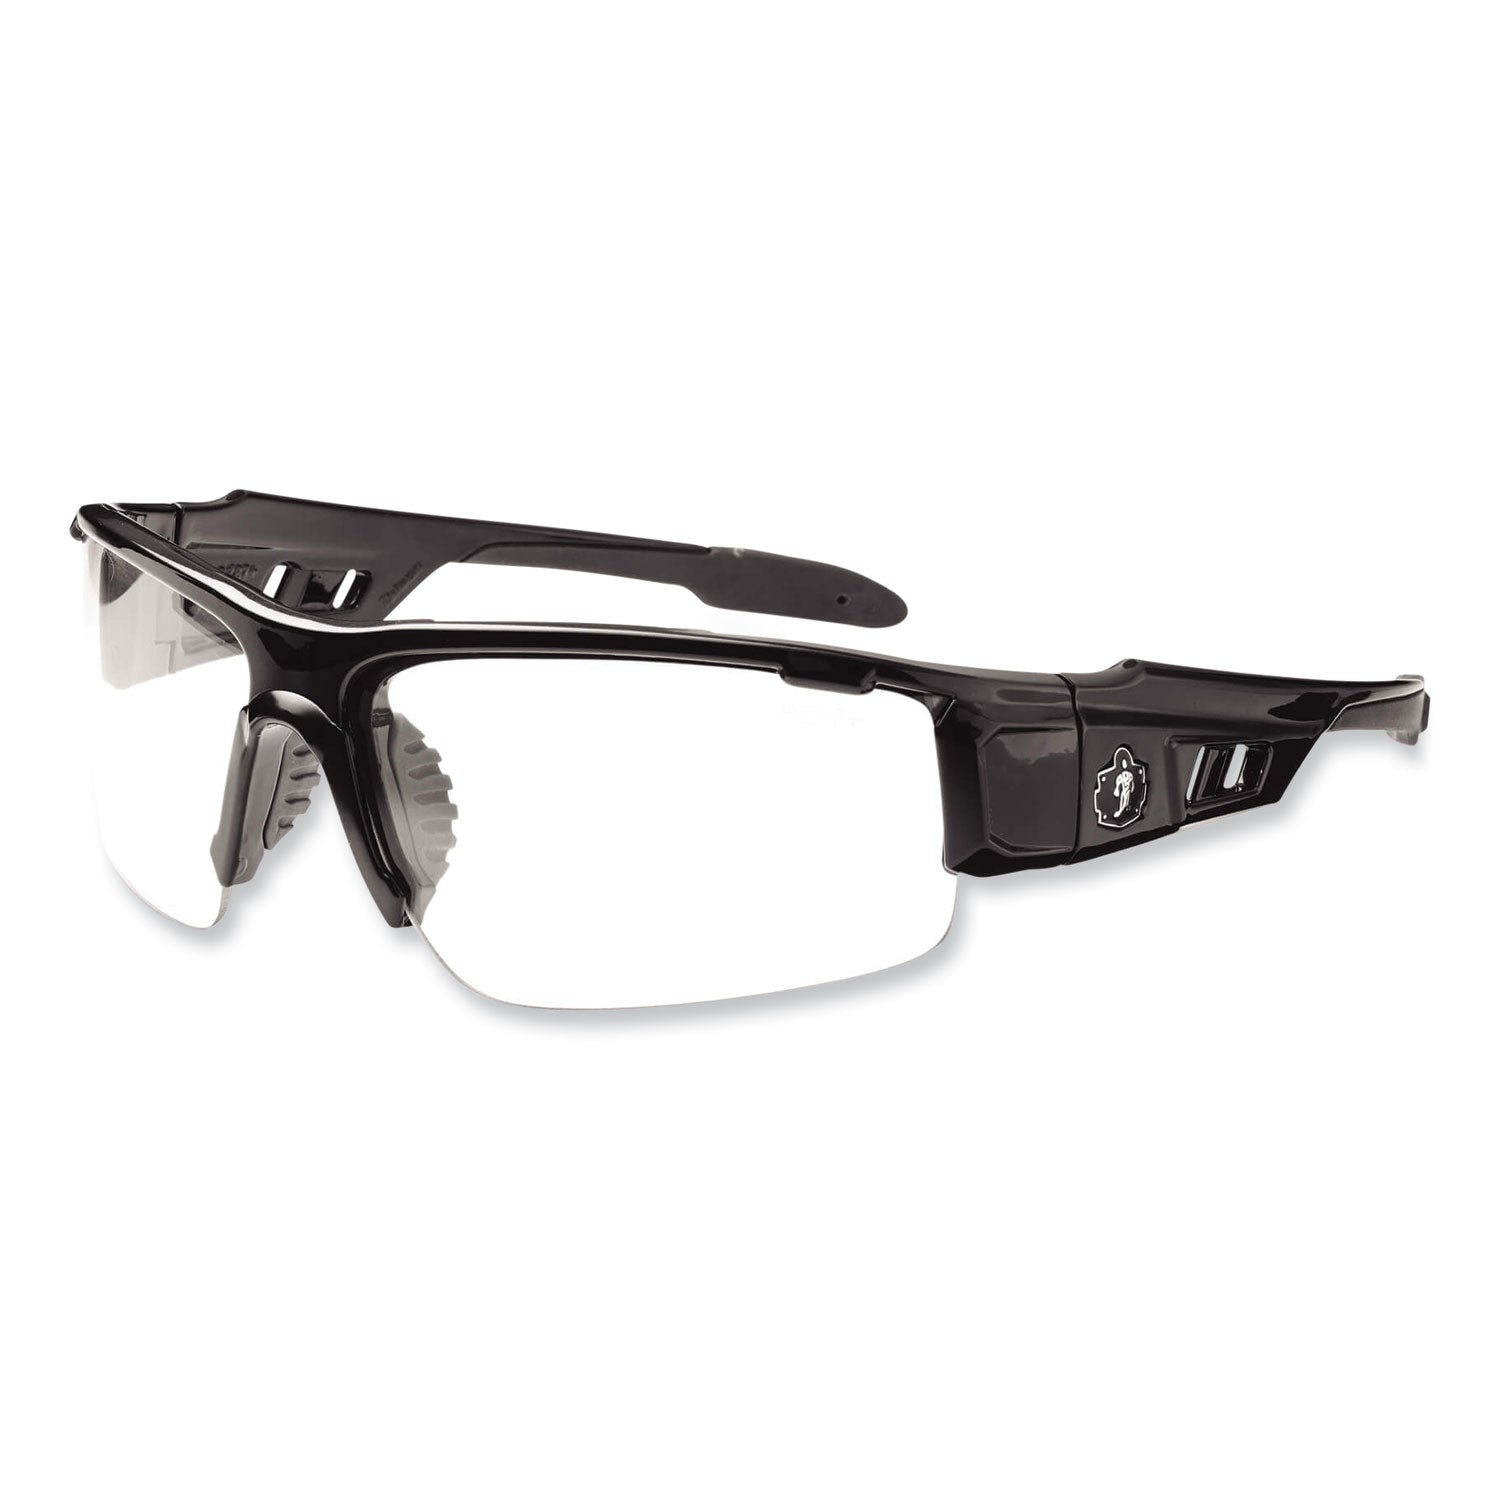 skullerz-dagr-safety-glasses-black-nylon-impact-frame-anti-fog-clear-polycarbonate-lens-ships-in-1-3-business-days_ego52003 - 1